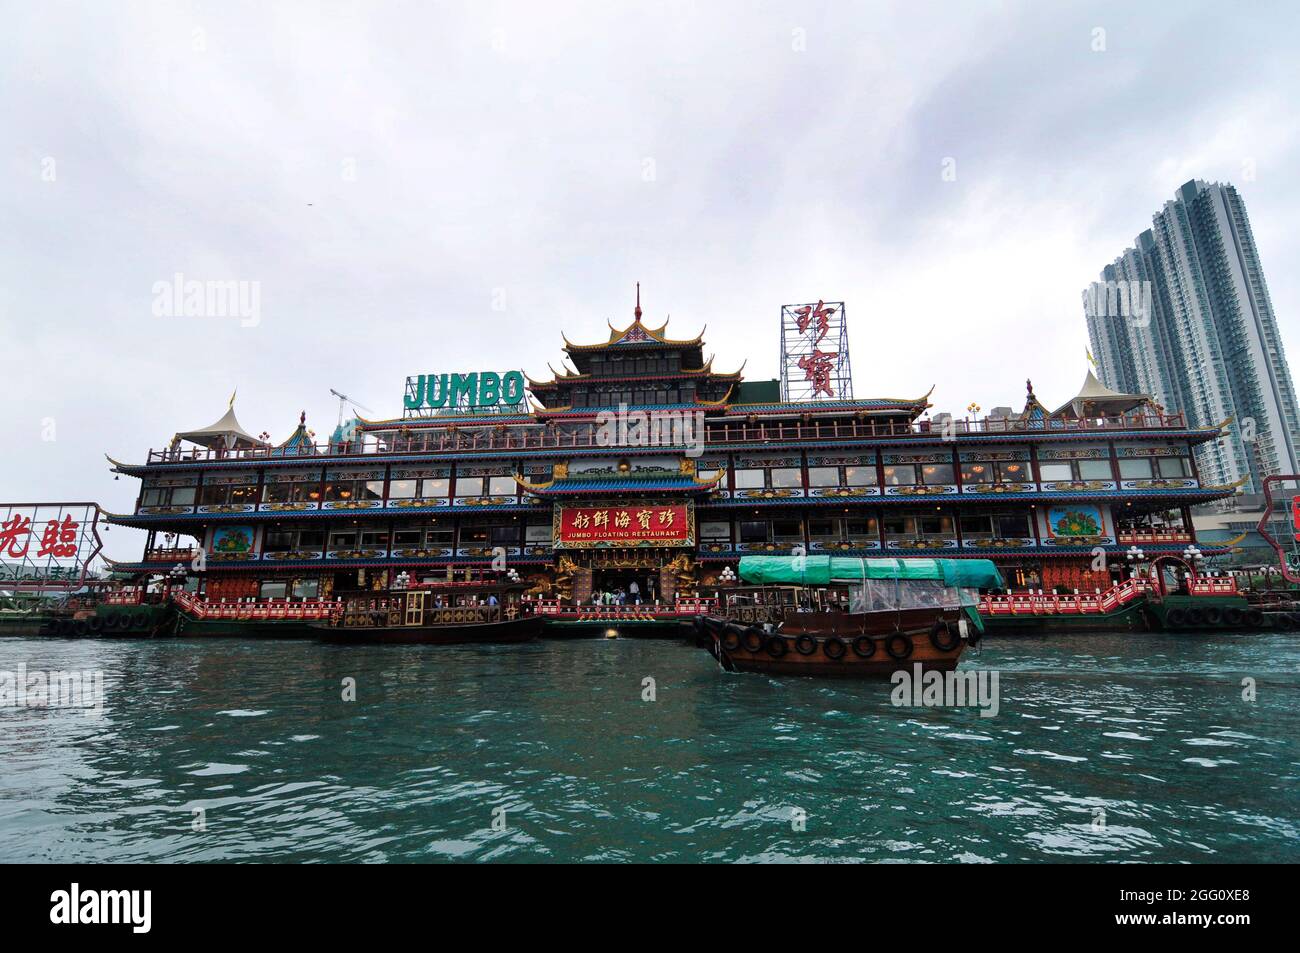 The Jumbo floating restaurant in Aberdeen, Hong Kong. Stock Photo